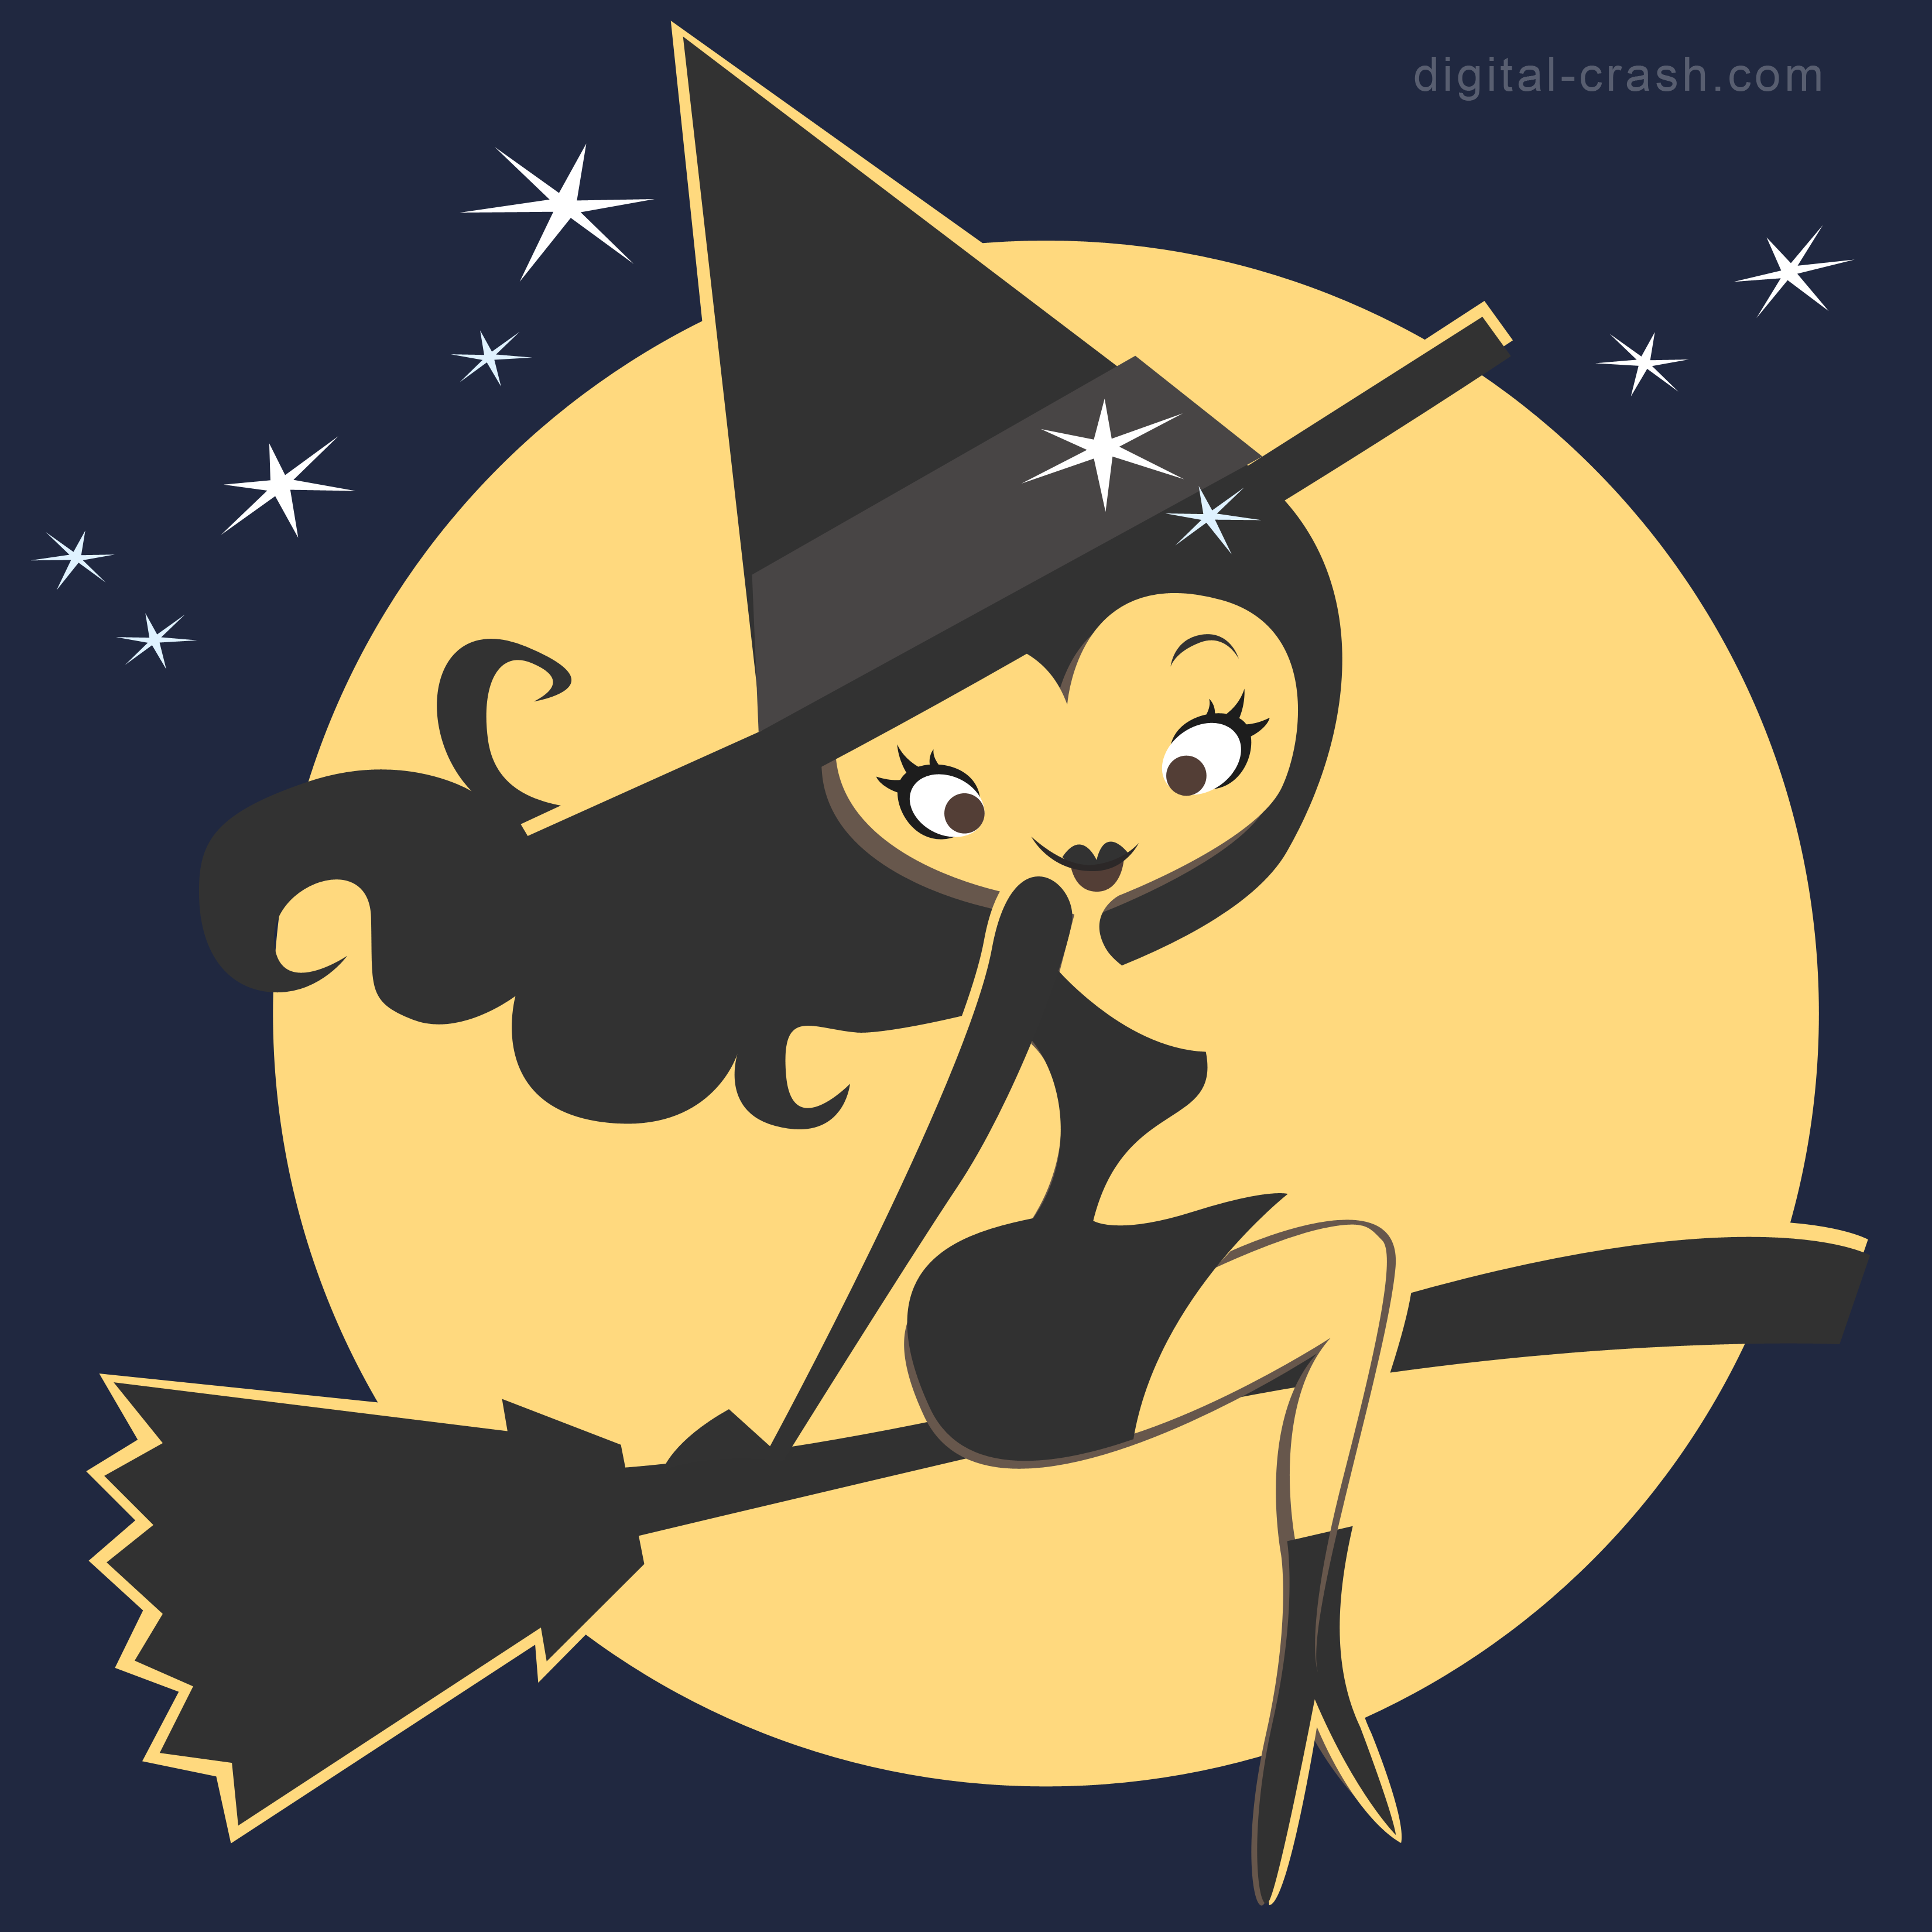 Cute Witch Design | Digital-Crash's Blog